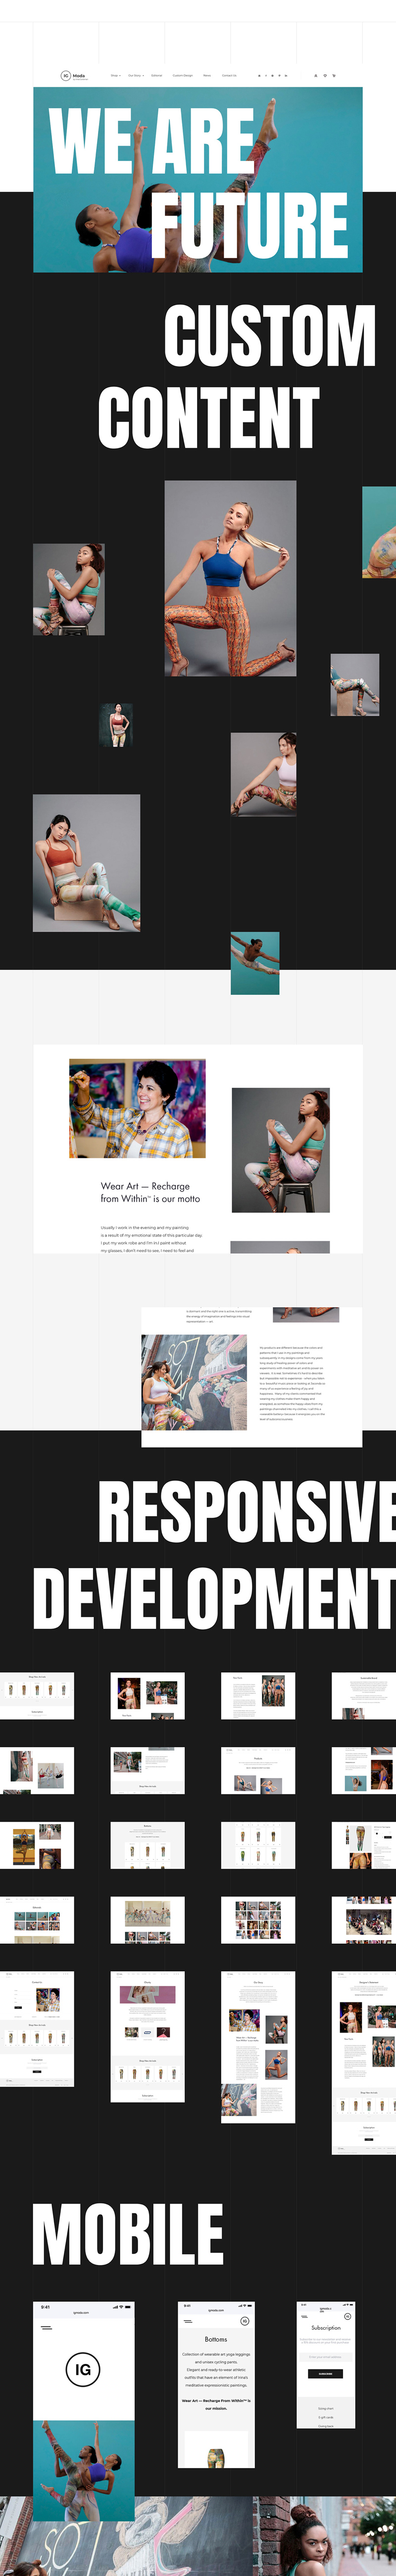 IG Moda - Website & Fashion UI Kit für Adobe XD